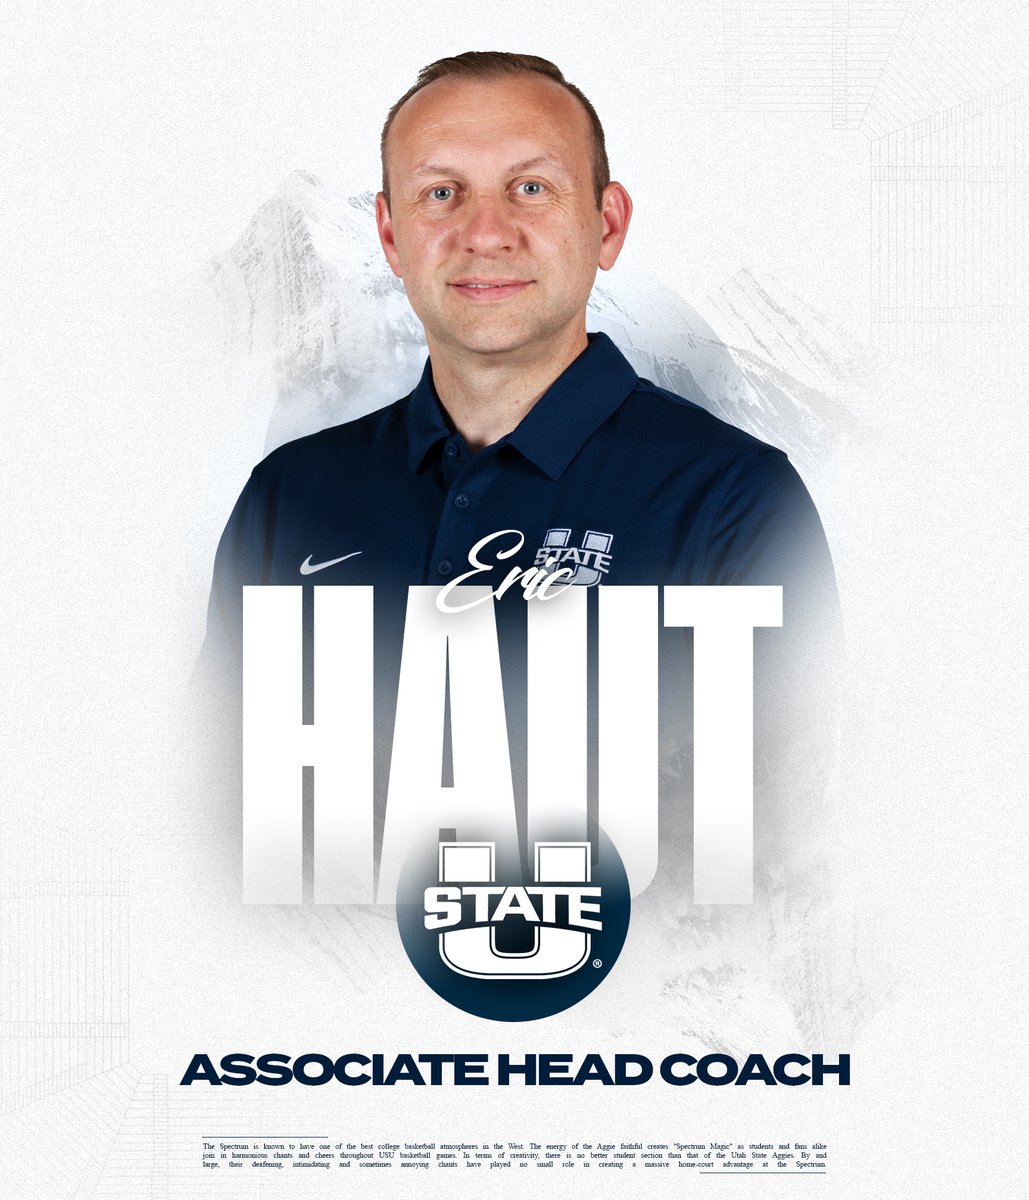 Welcome to the squad @Eric_Haut_USU! Eric Haut joins @usubasketball as the Associate Head Coach. ➡️ bit.ly/3V1ZvXZ